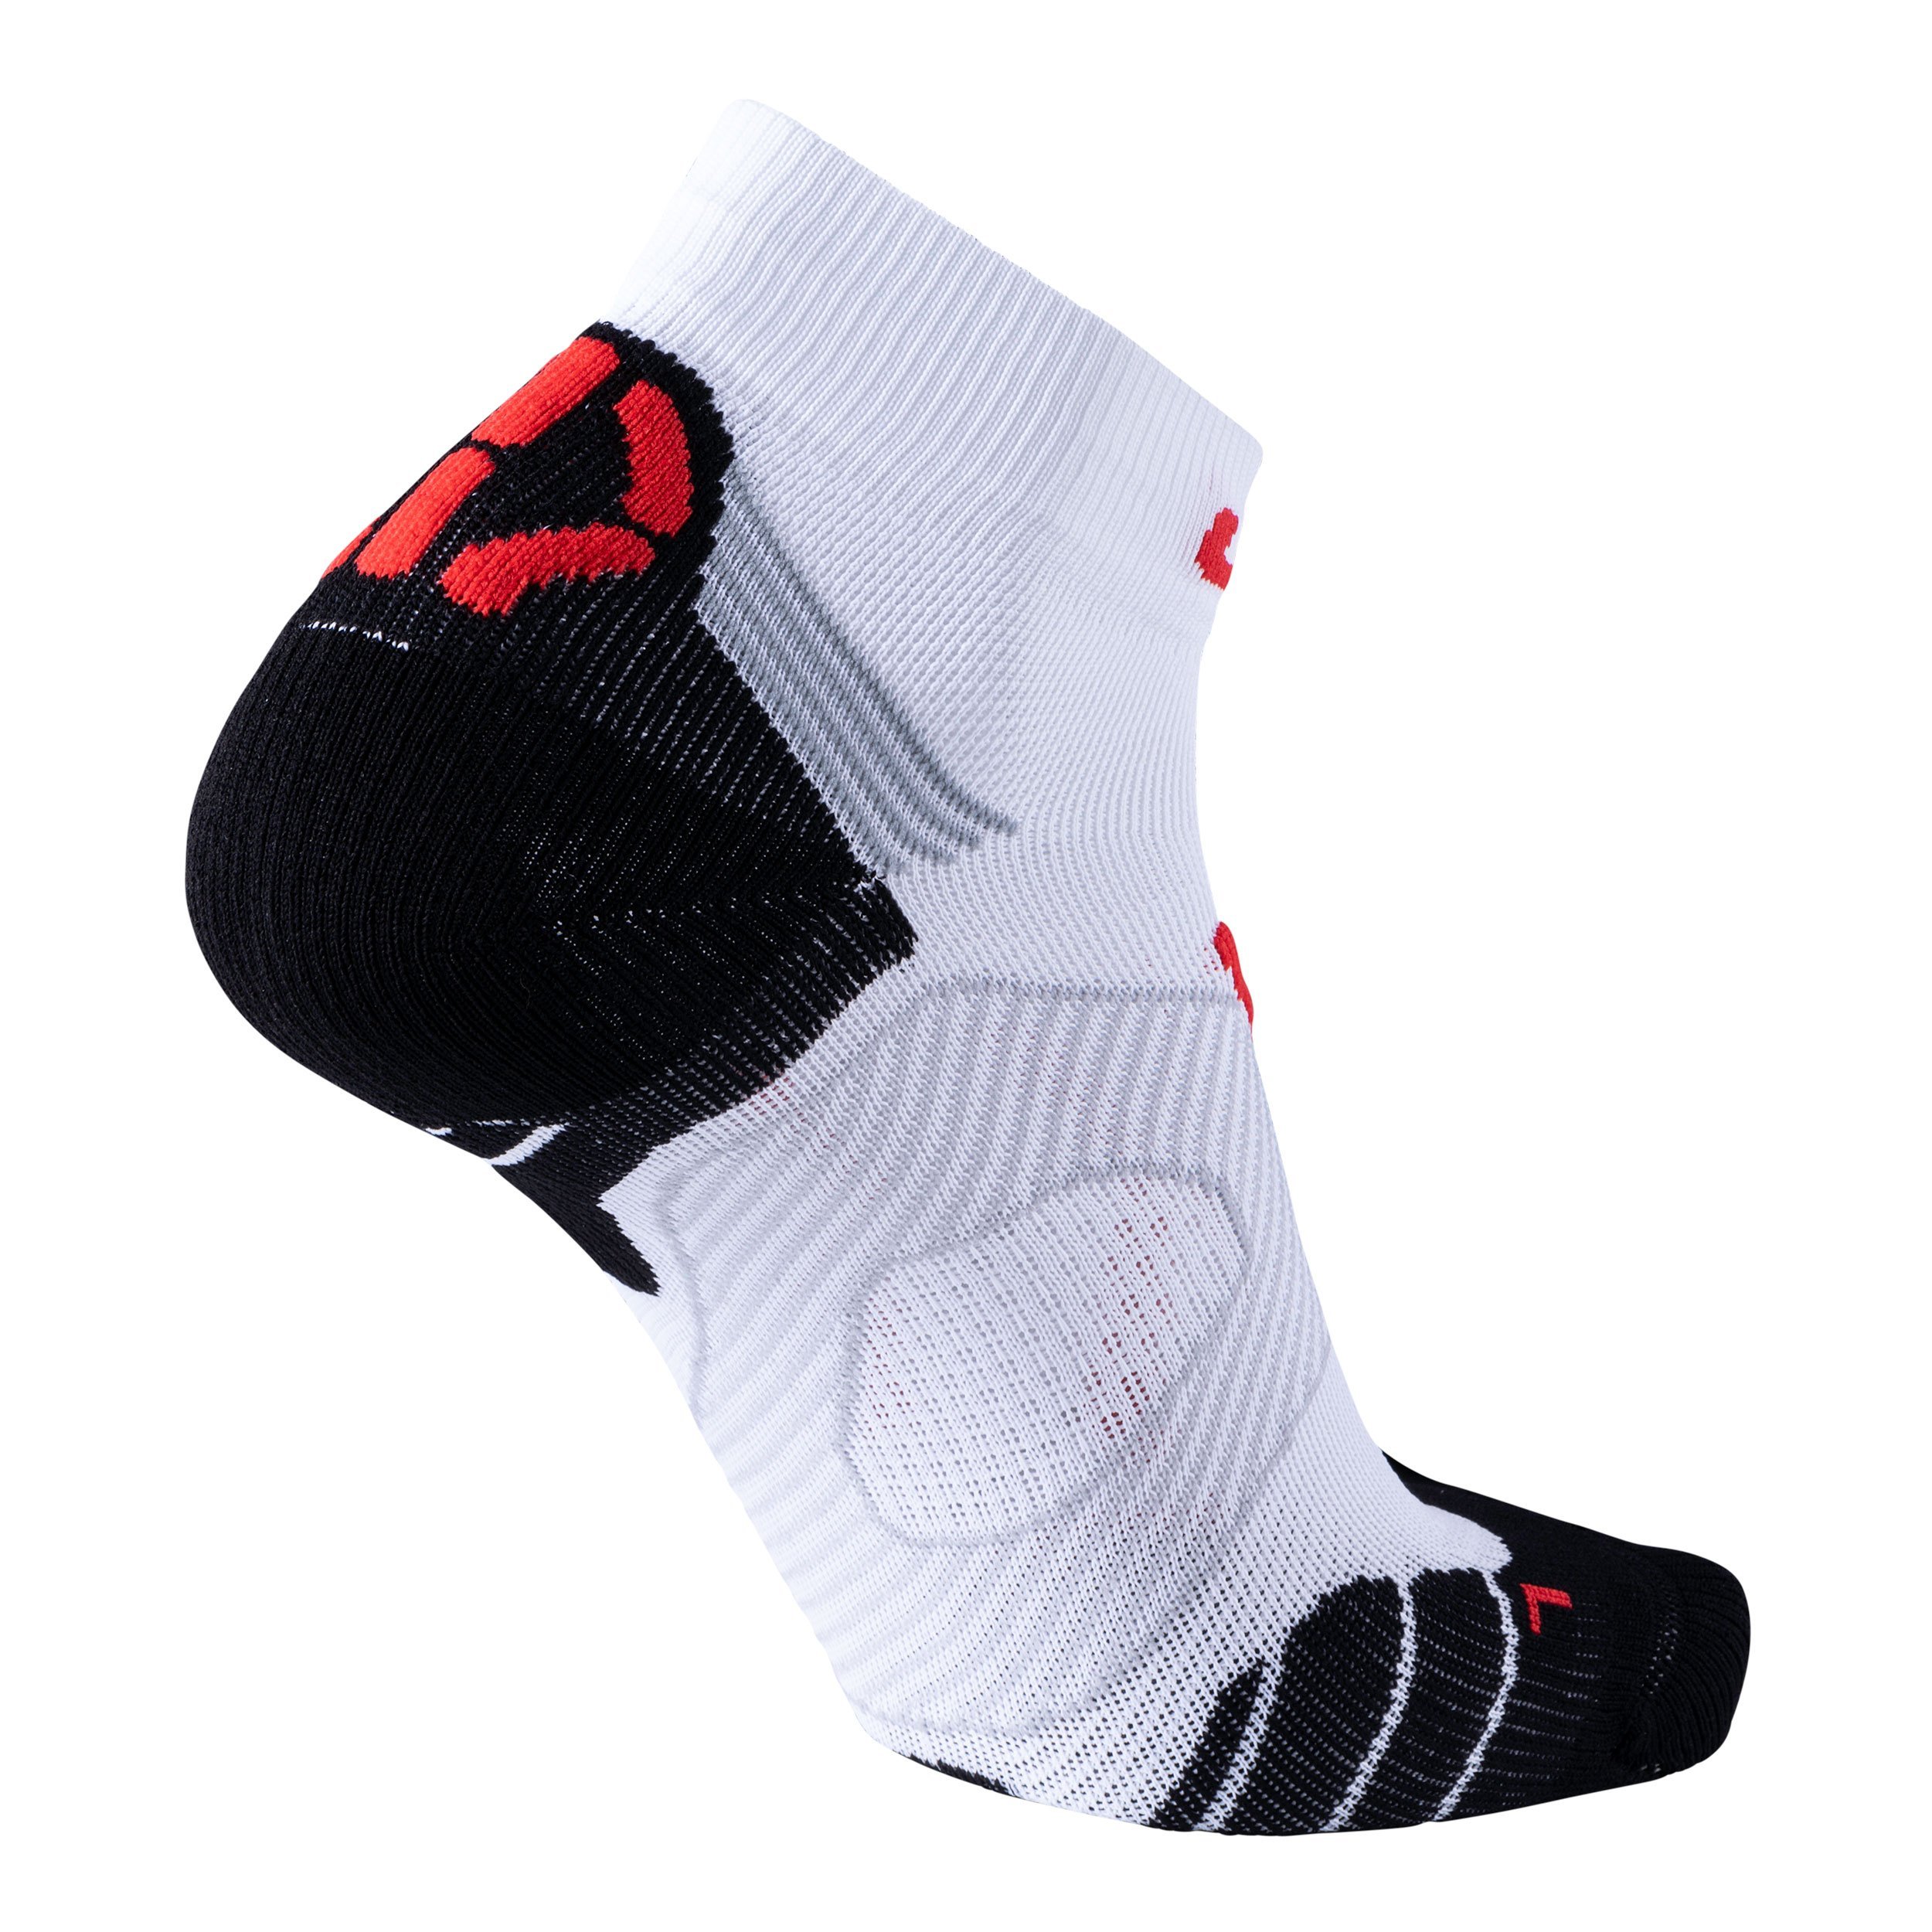 Ponožky UYN RUN SUPER FAST SOCKS - biela/červená